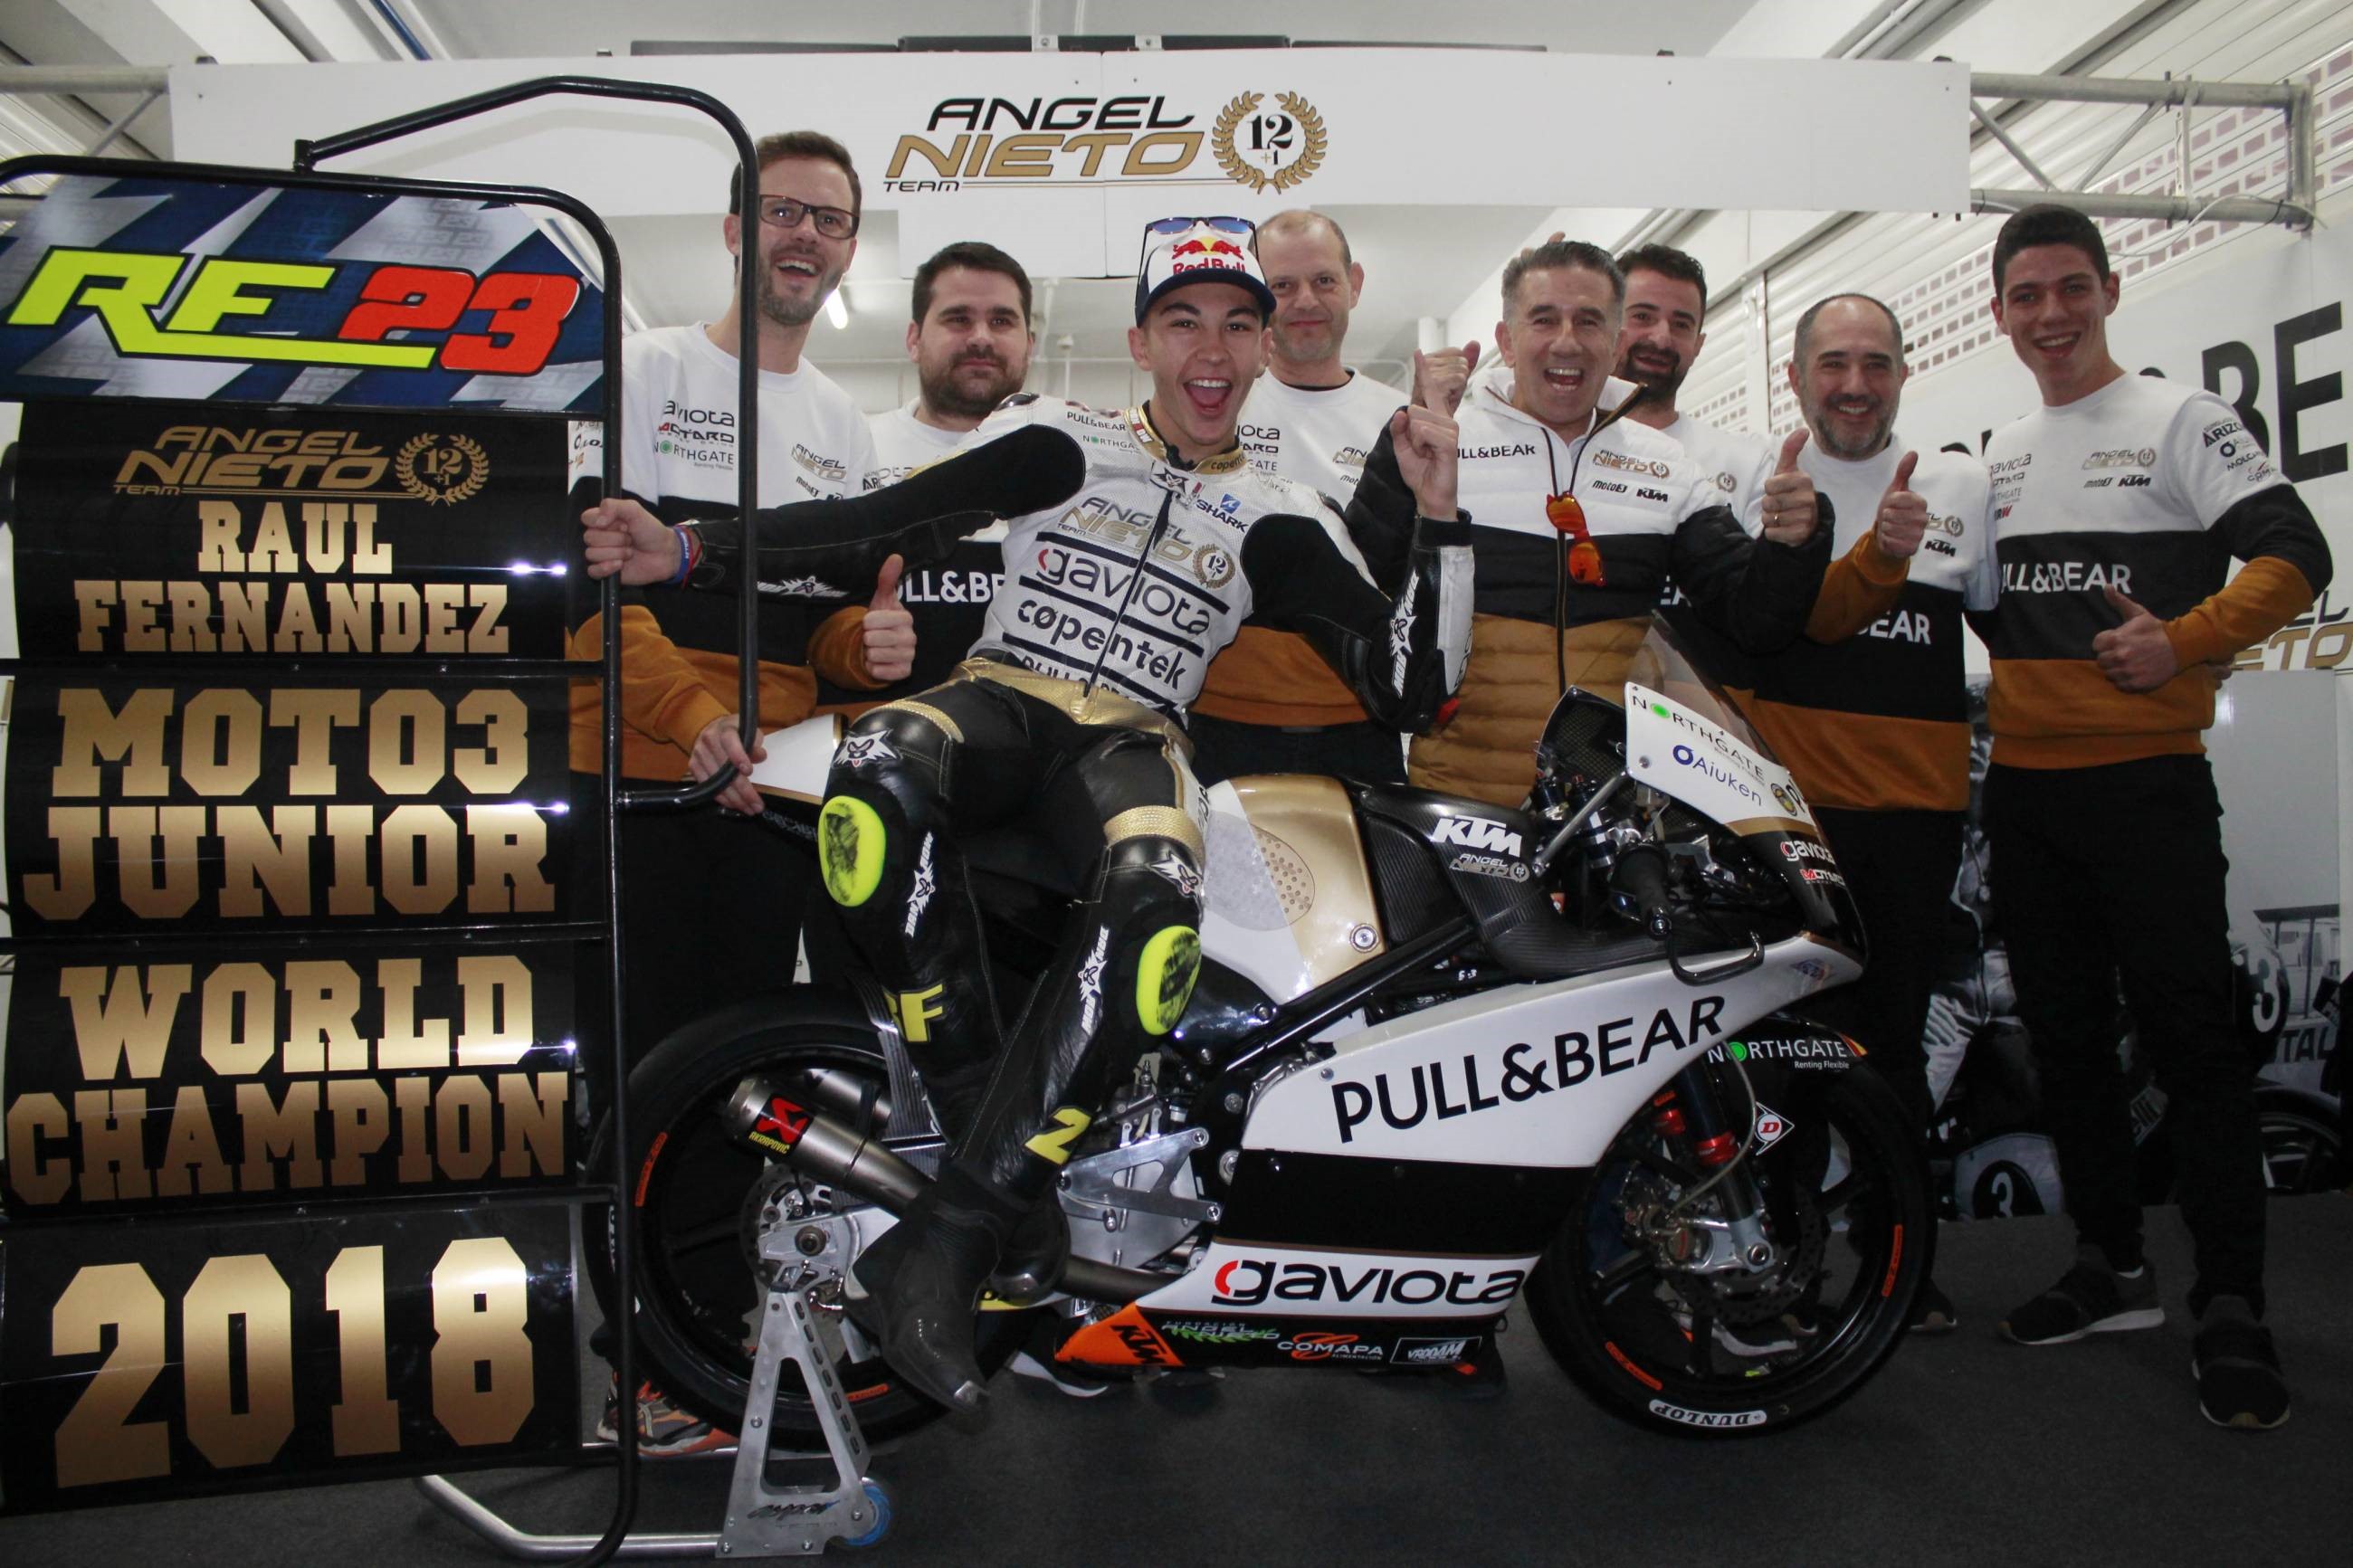 Raúl Fernández becomes first Spanish Moto3 Junior World Champion